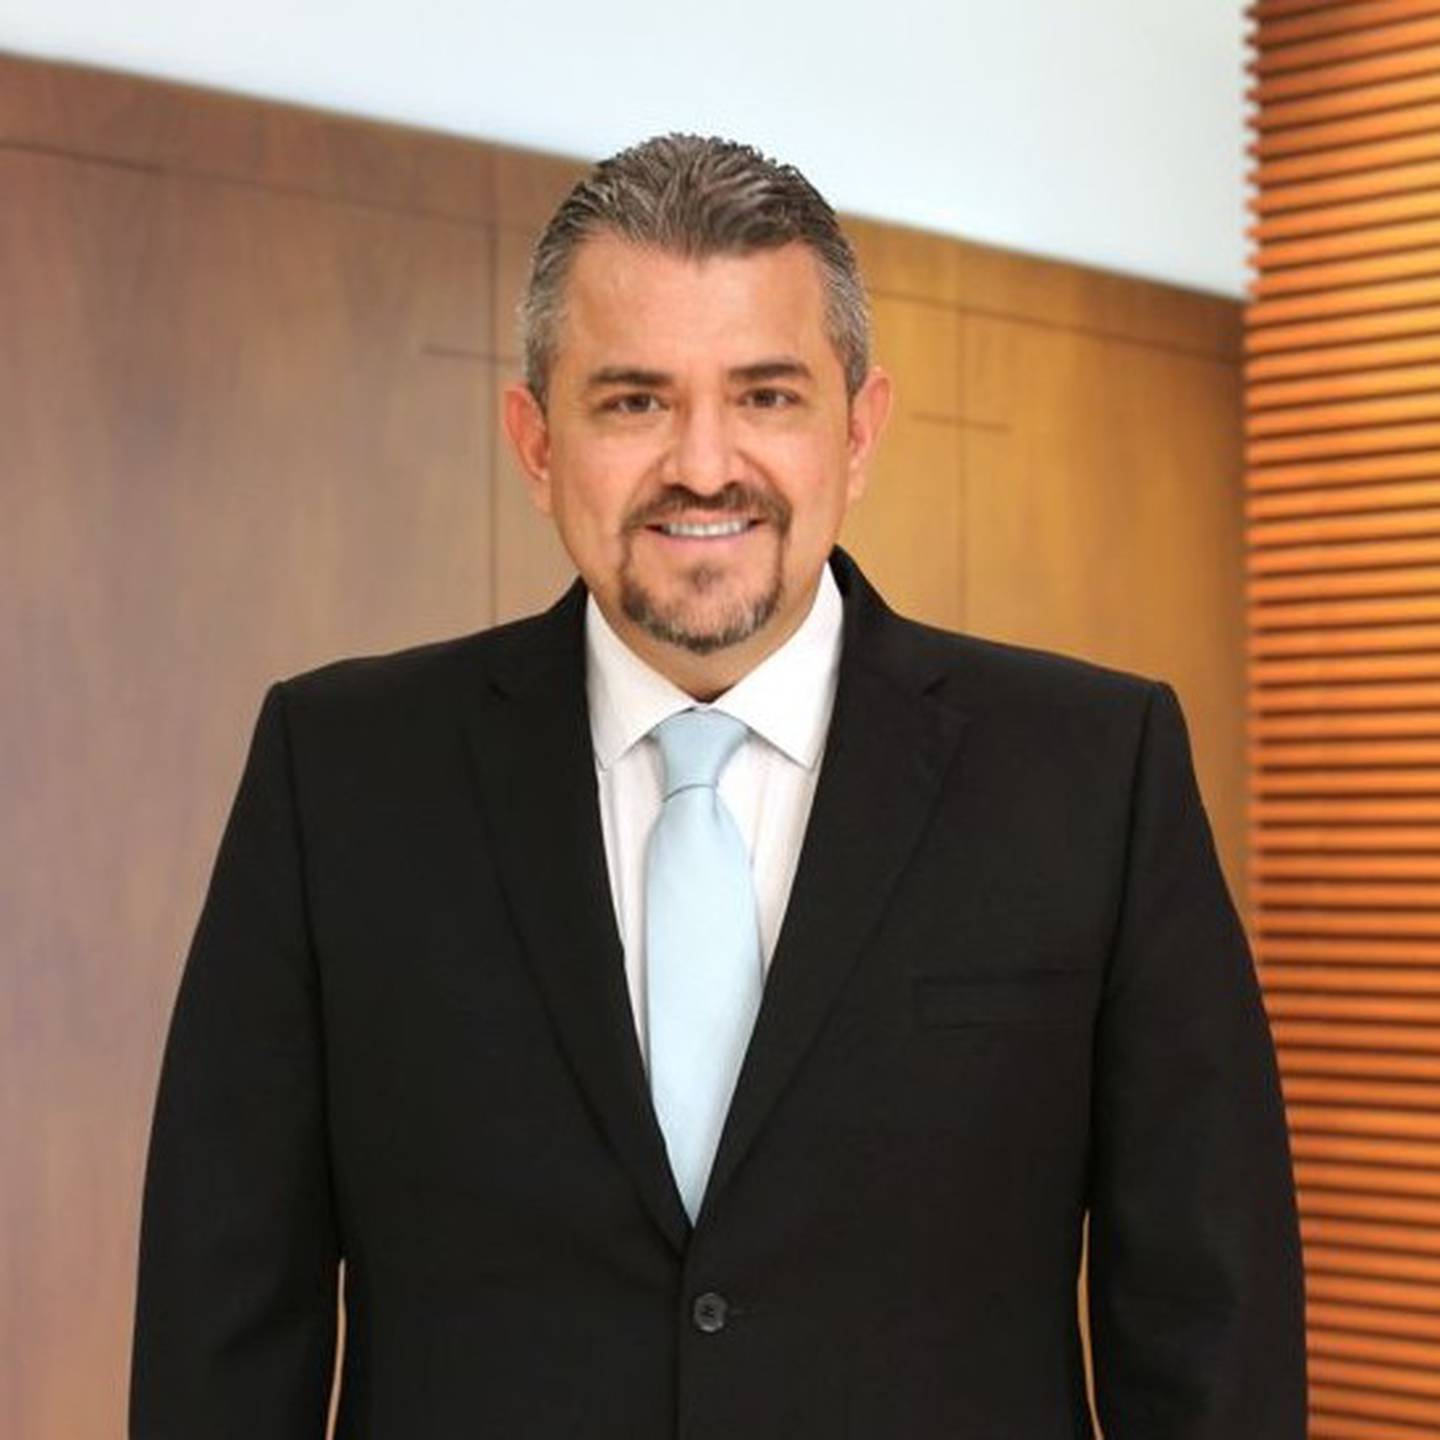 Ricardo Aguilar Abe, economista en jefe de Invex Bancodfd